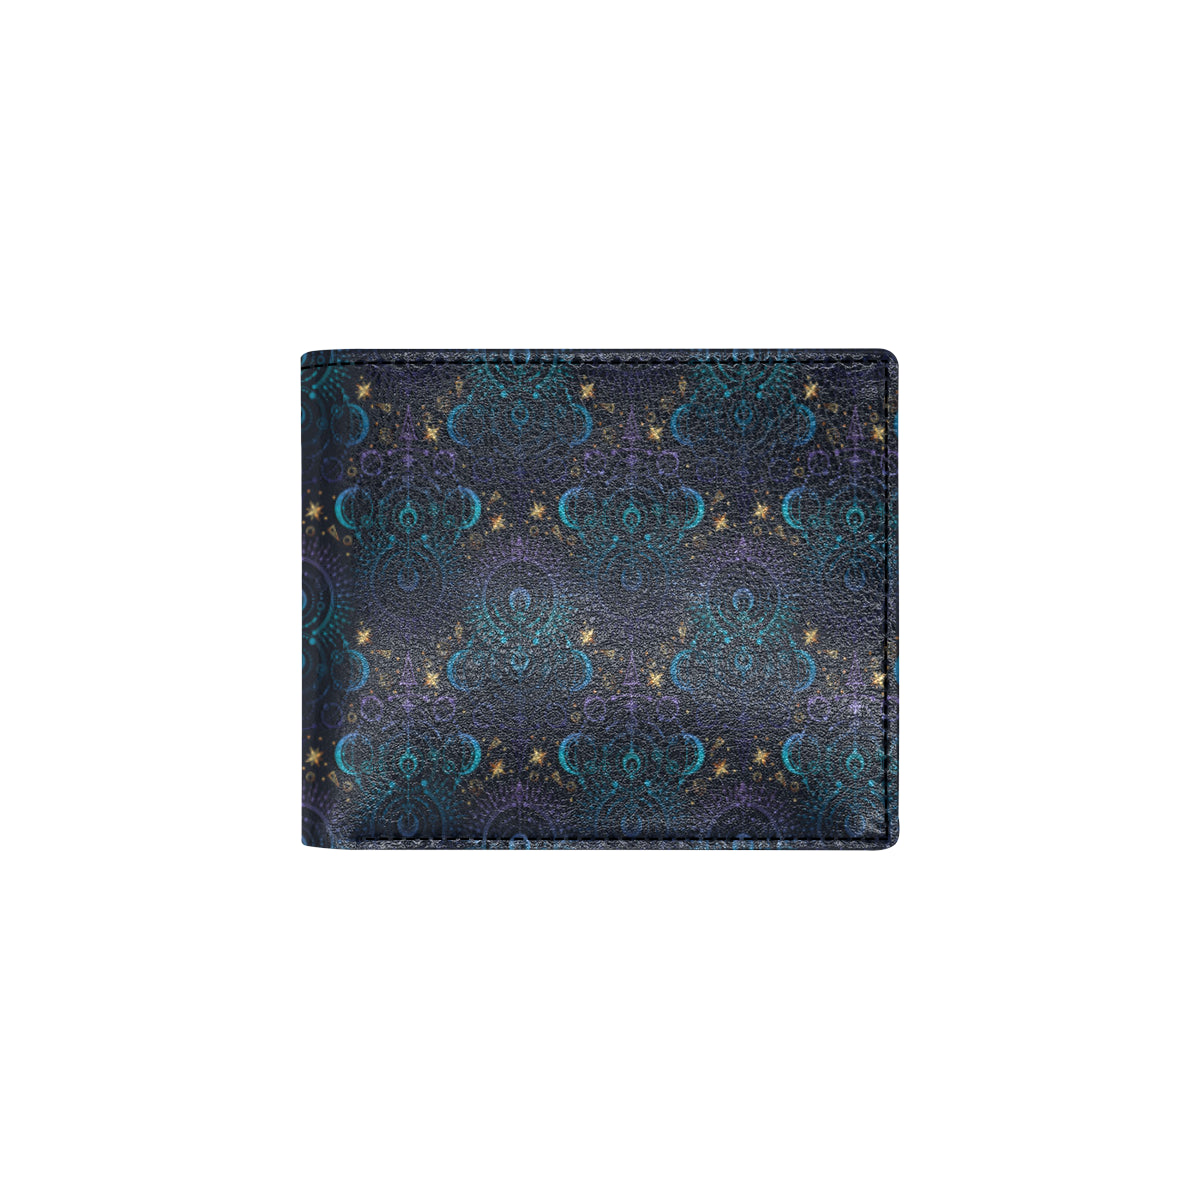 Celestial Pattern Print Design 06 Men's ID Card Wallet